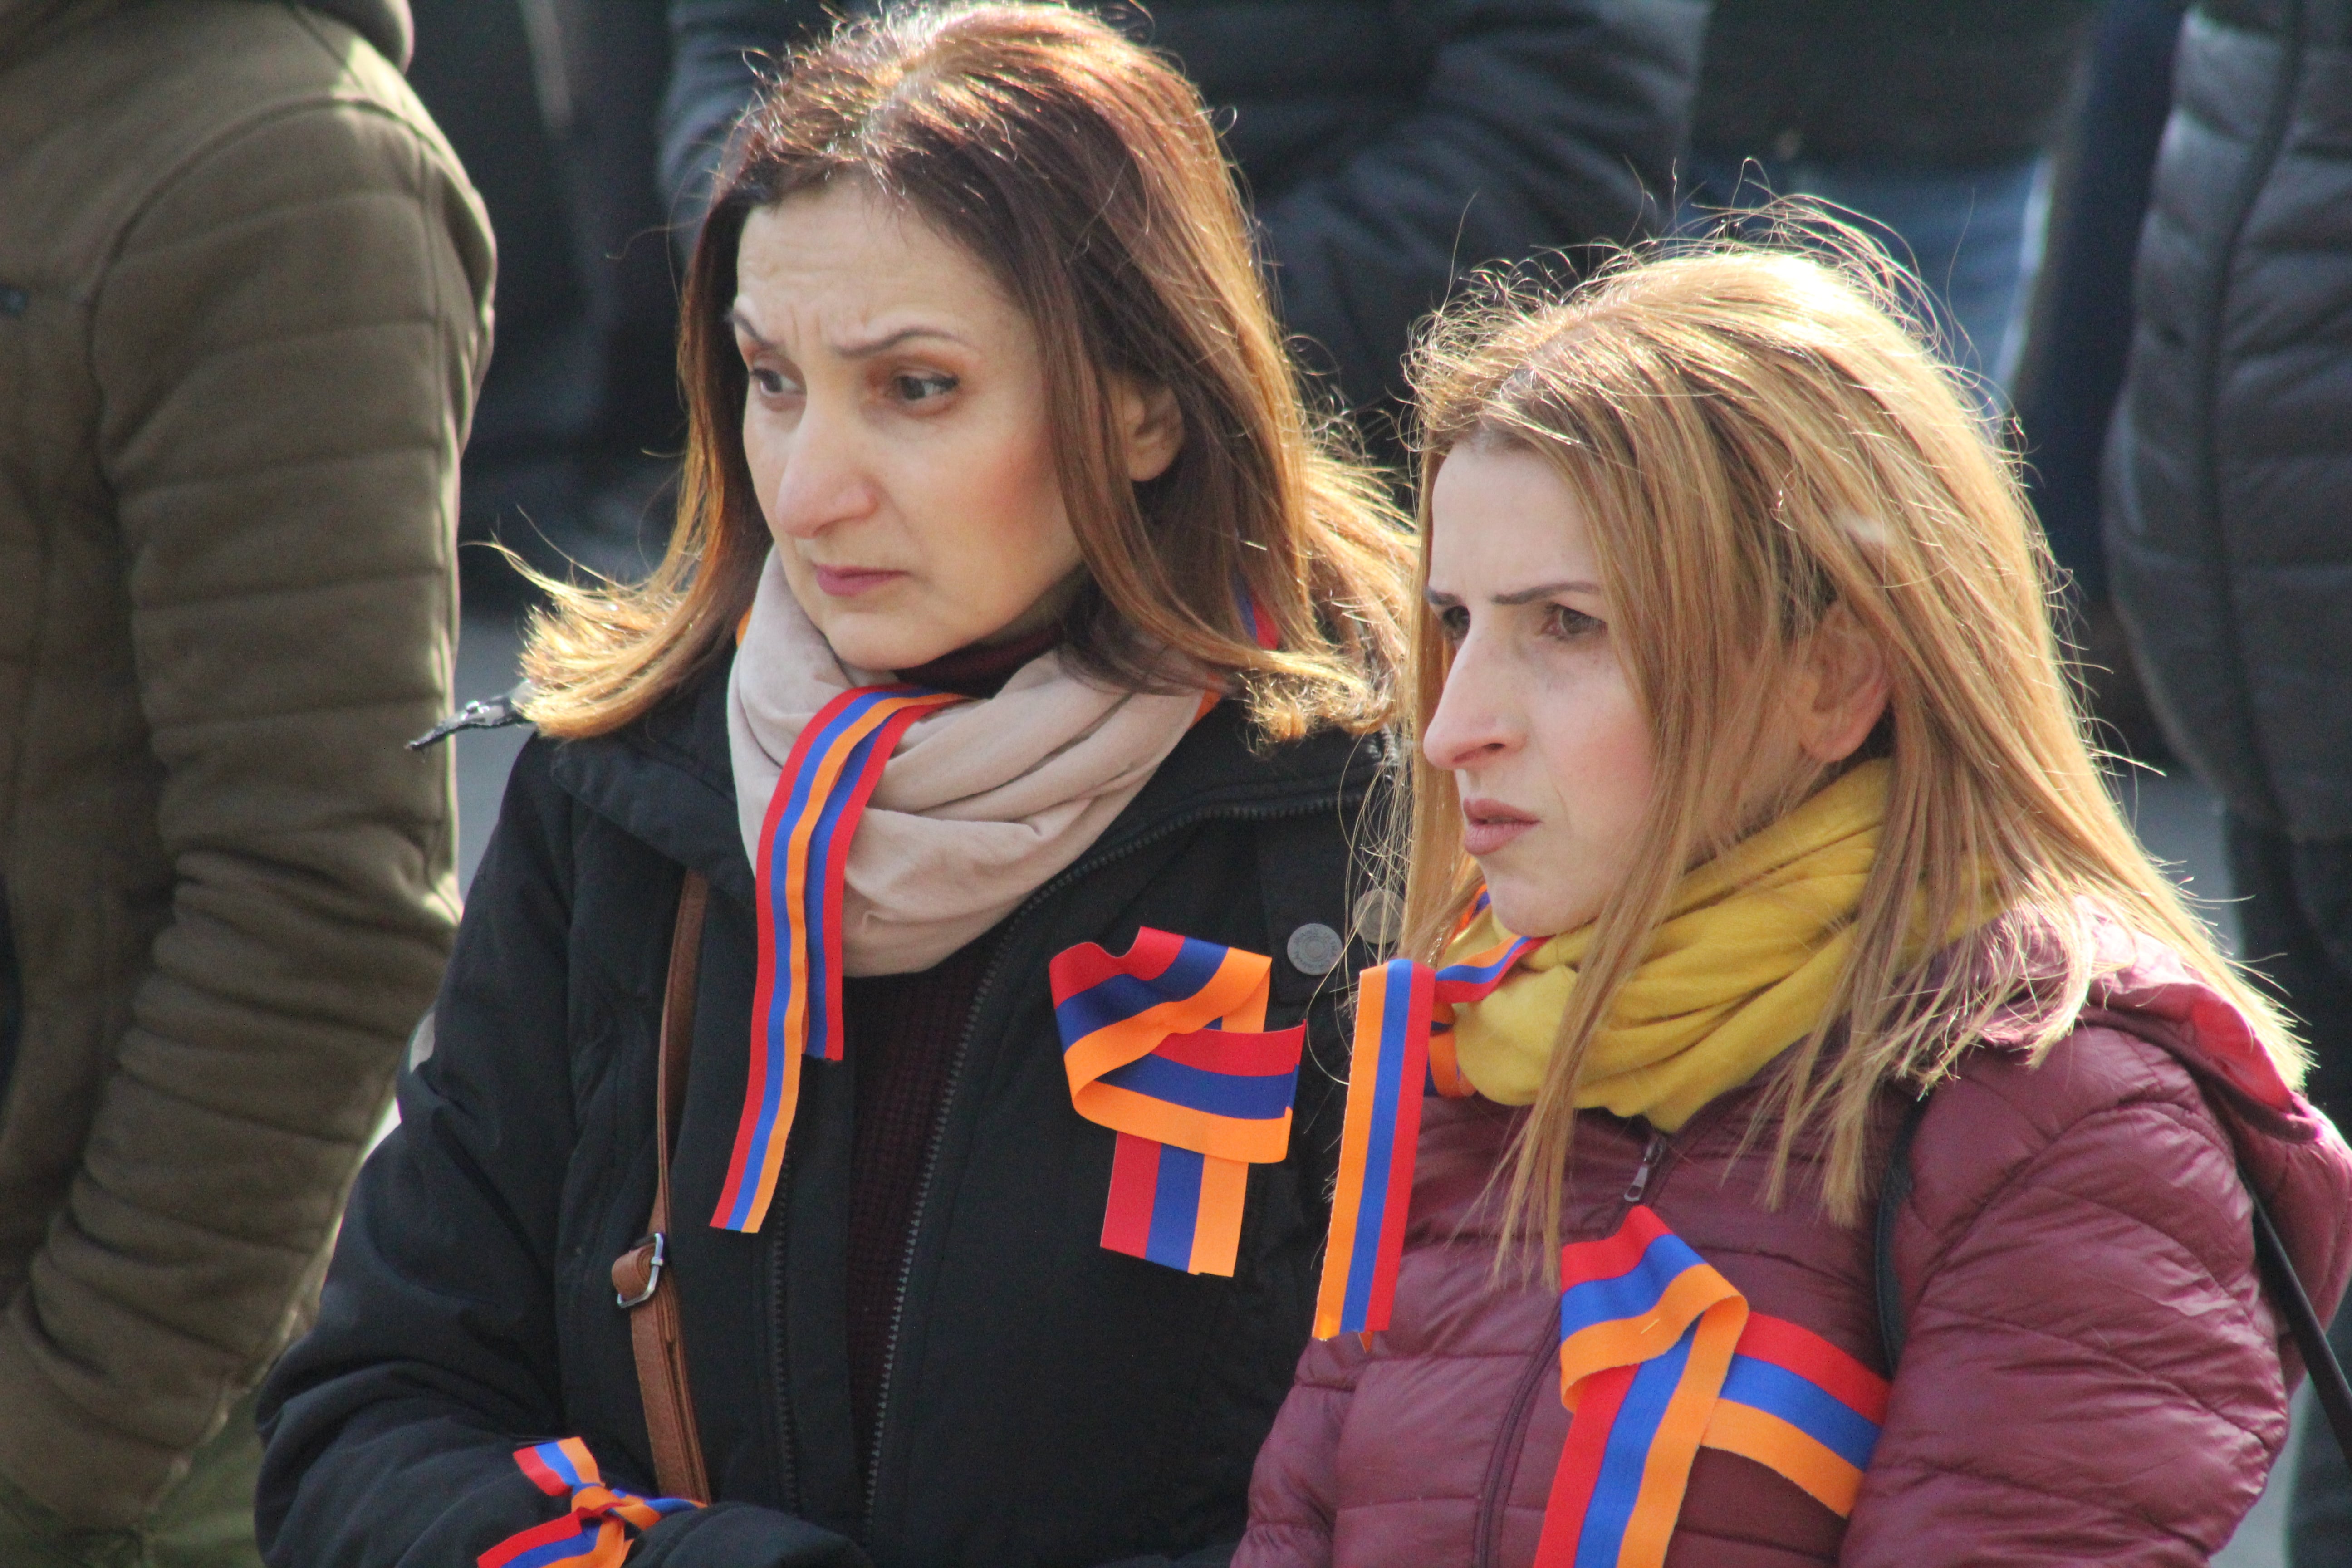 Митинг "Национально-демократического полюса" в Ереване 20 марта 2021 года. Фото Тиграна Петросяна для "Кавказского узла"